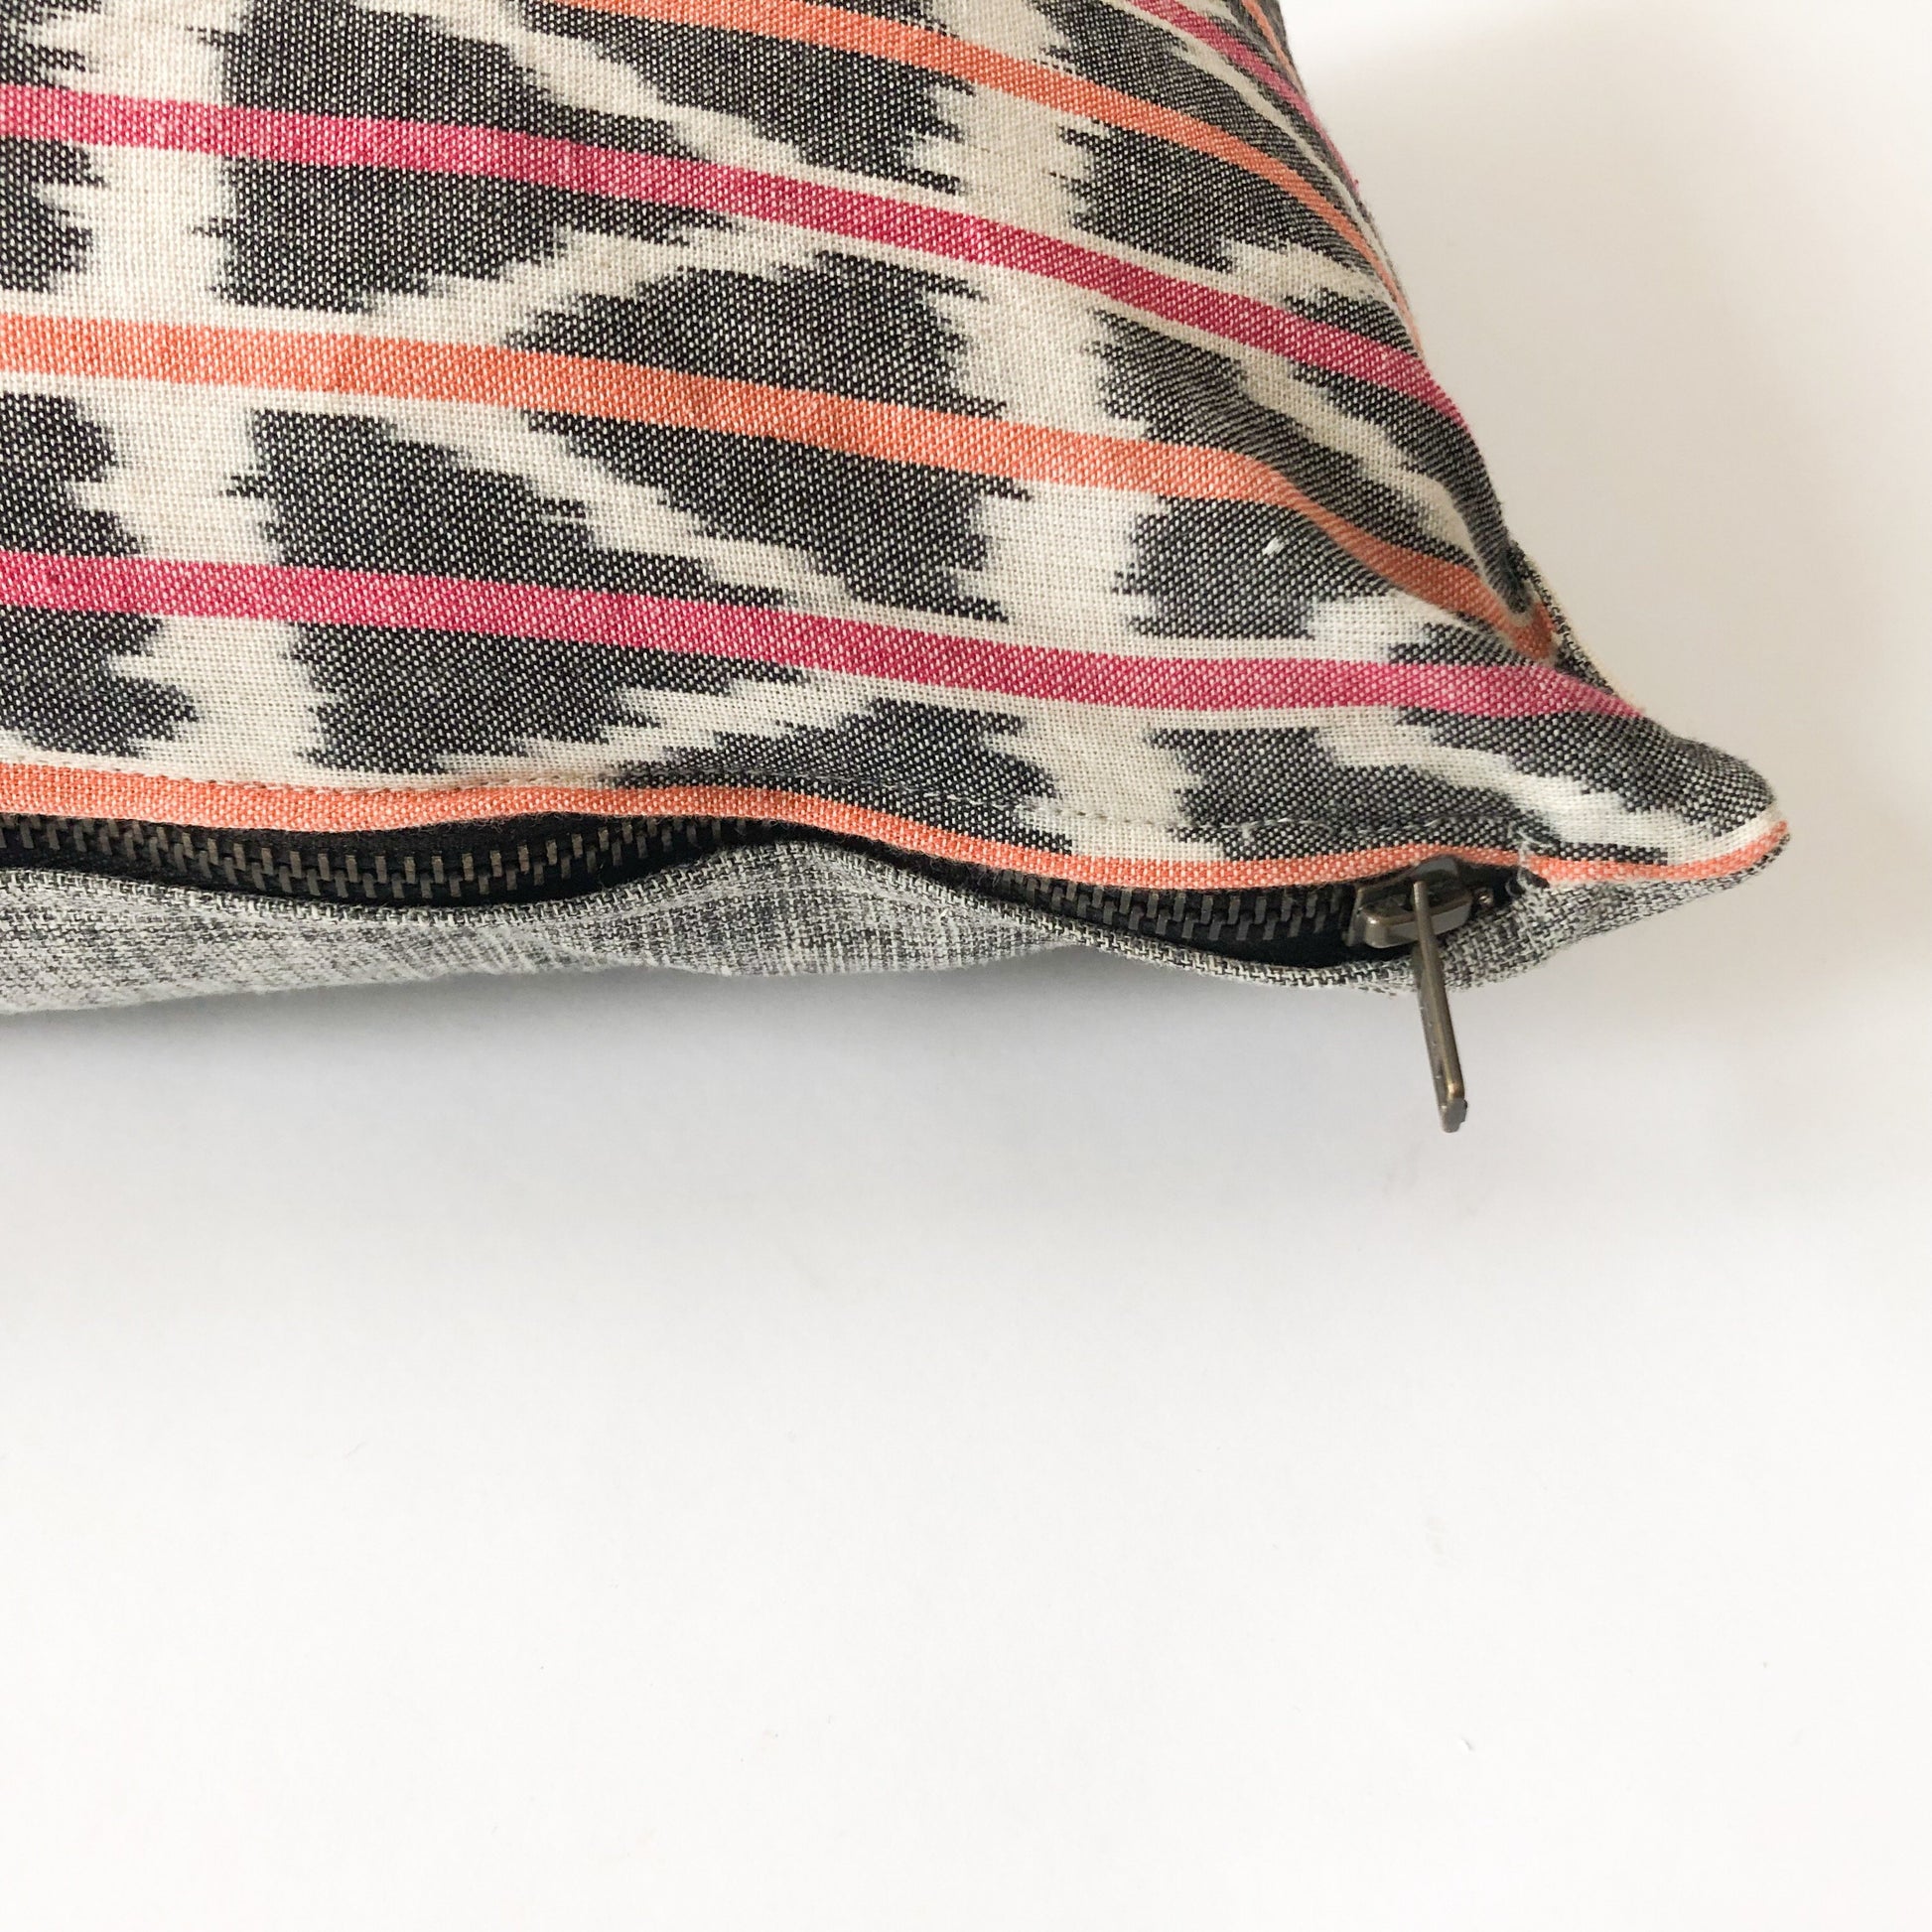 Rustic Loom Handwoven Ikat Lumbar Throw Pillow Orange Pink Triangle Stripe
Jungle Pillows